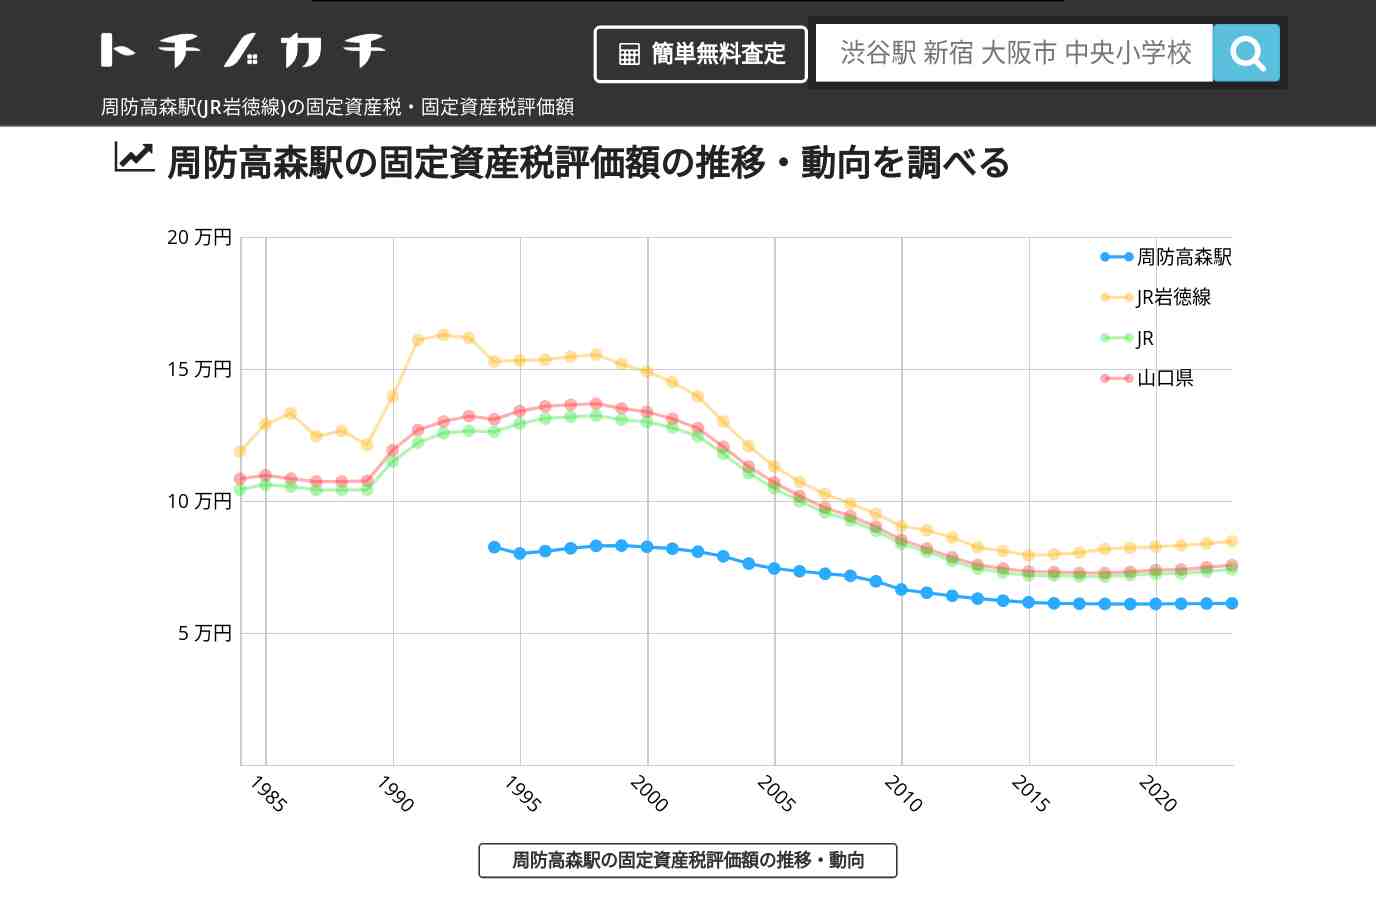 周防高森駅(JR岩徳線)の固定資産税・固定資産税評価額 | トチノカチ